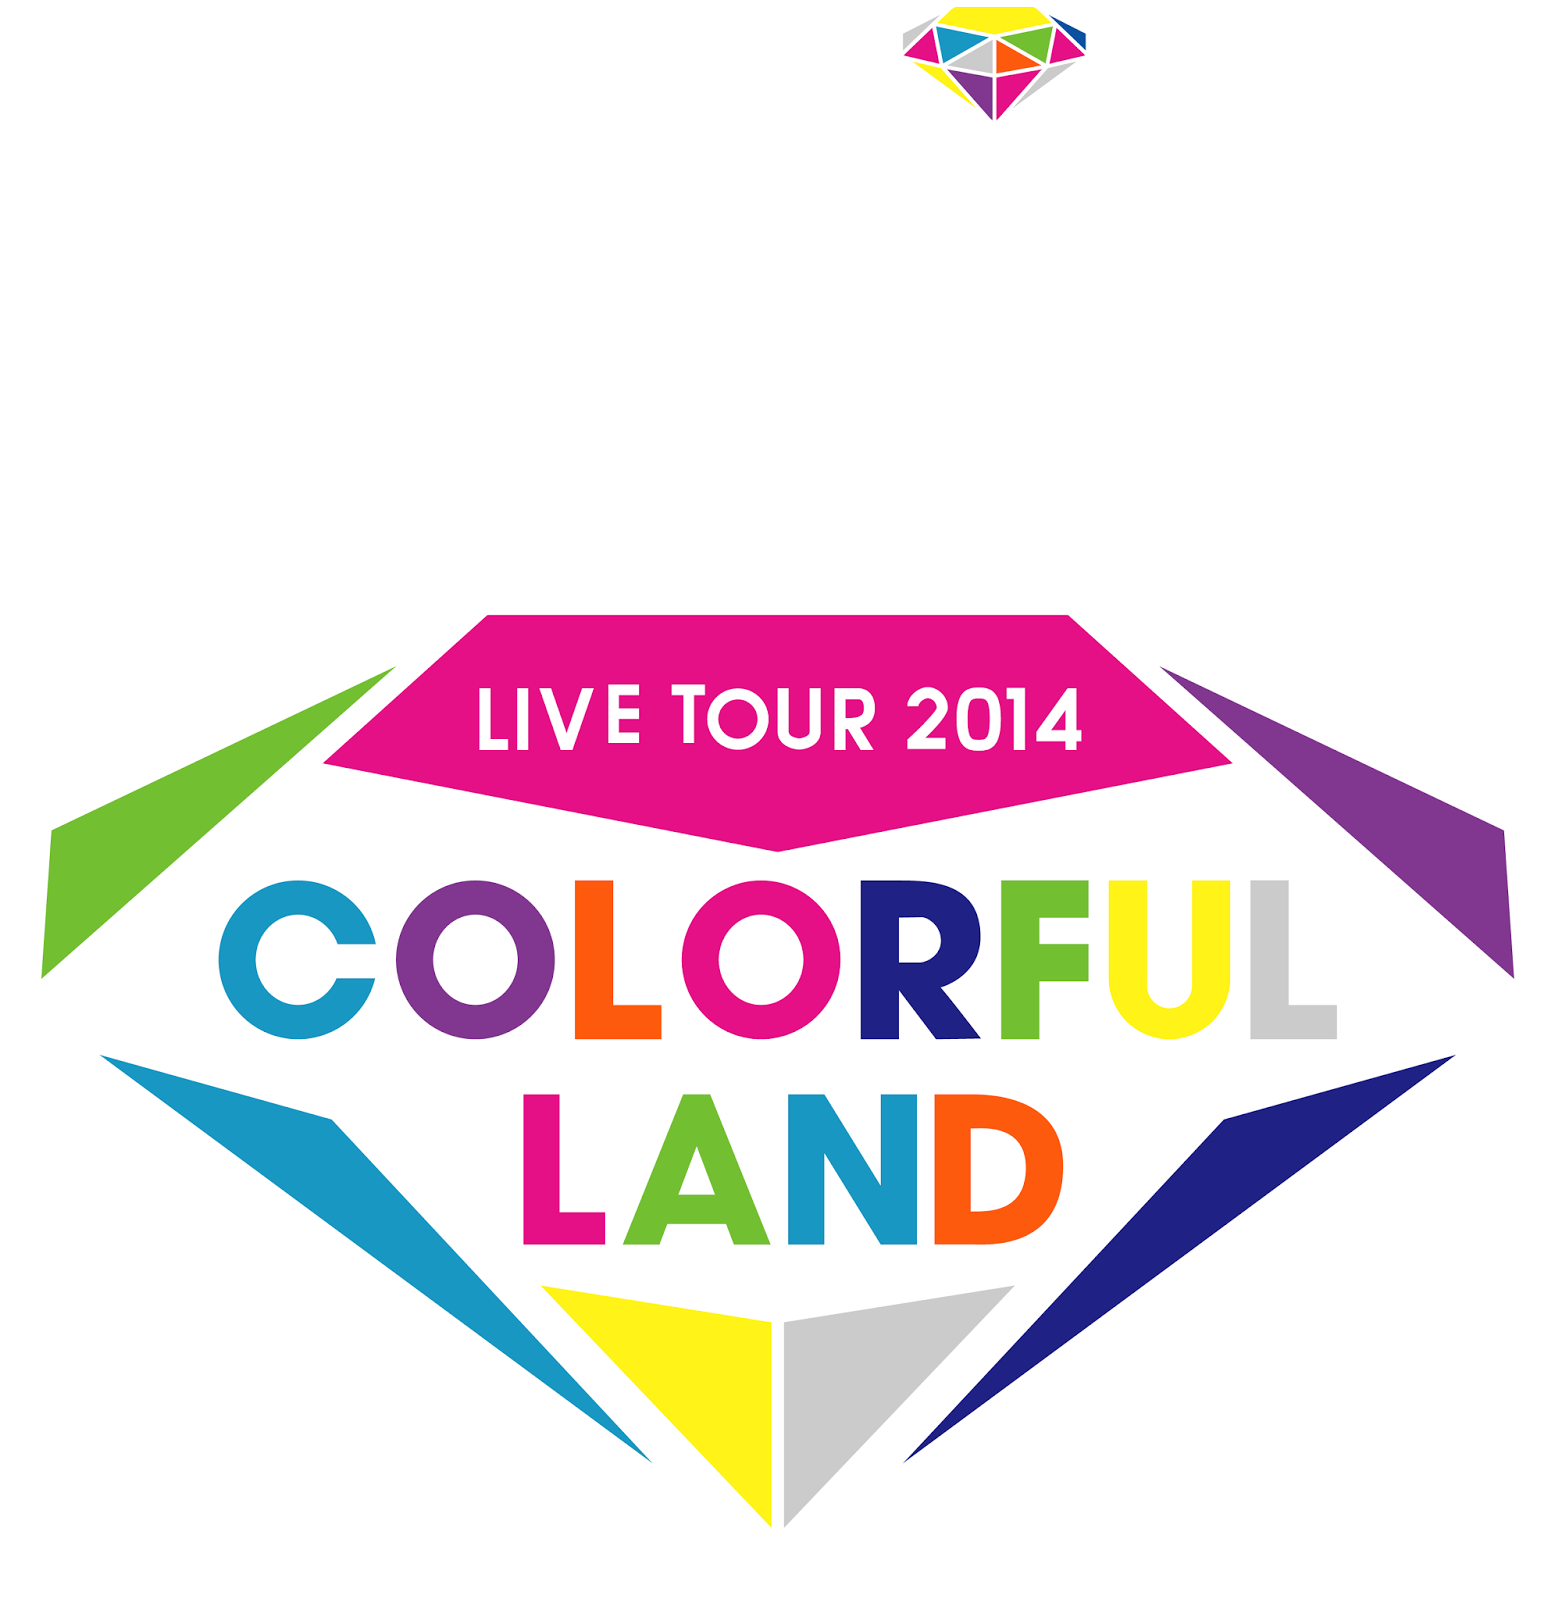 E Girls Live Tour 14 Colorful Land のロゴ